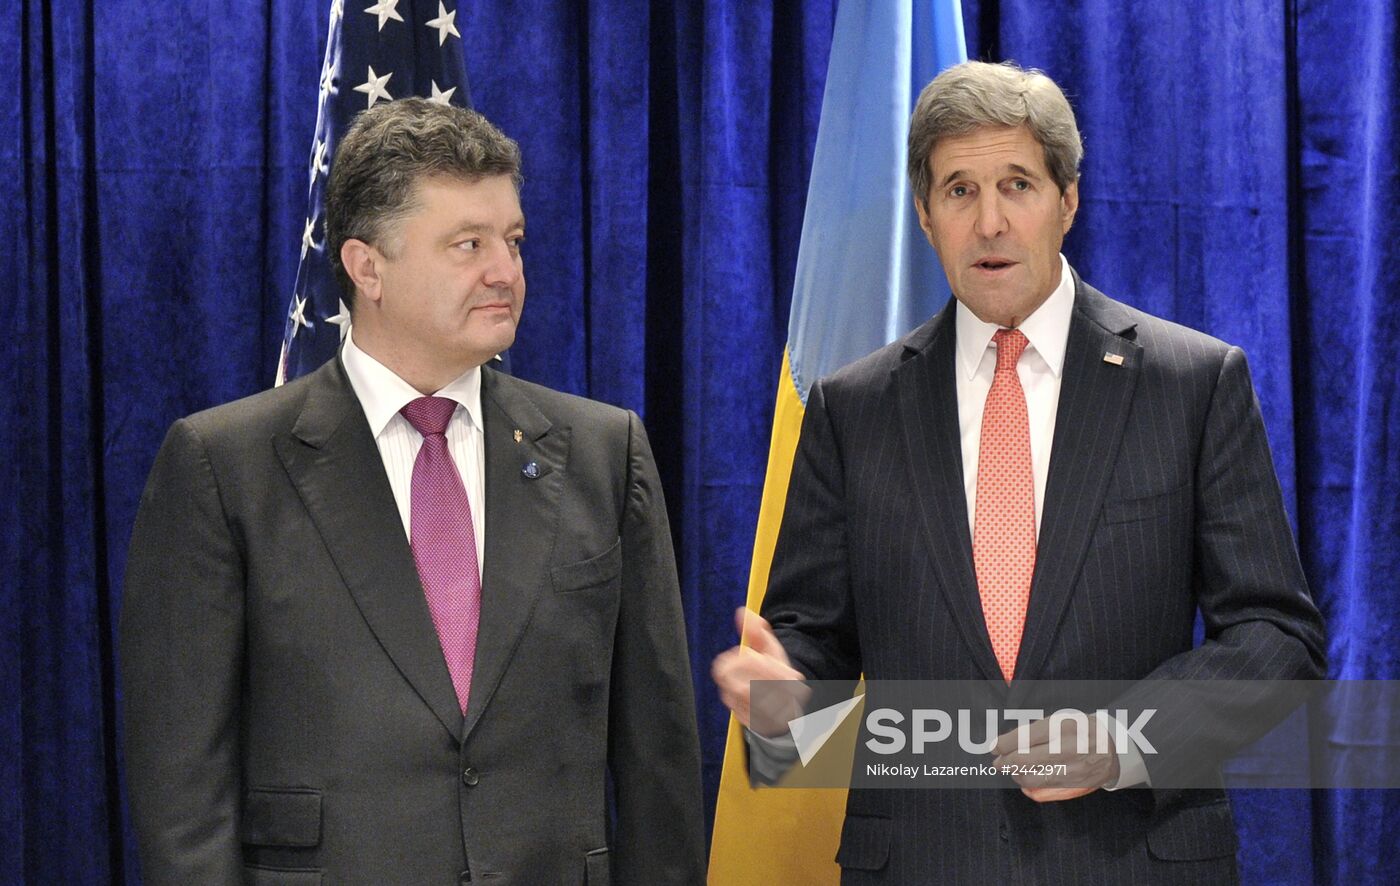 John Kerry meets with Petro Poroshenko